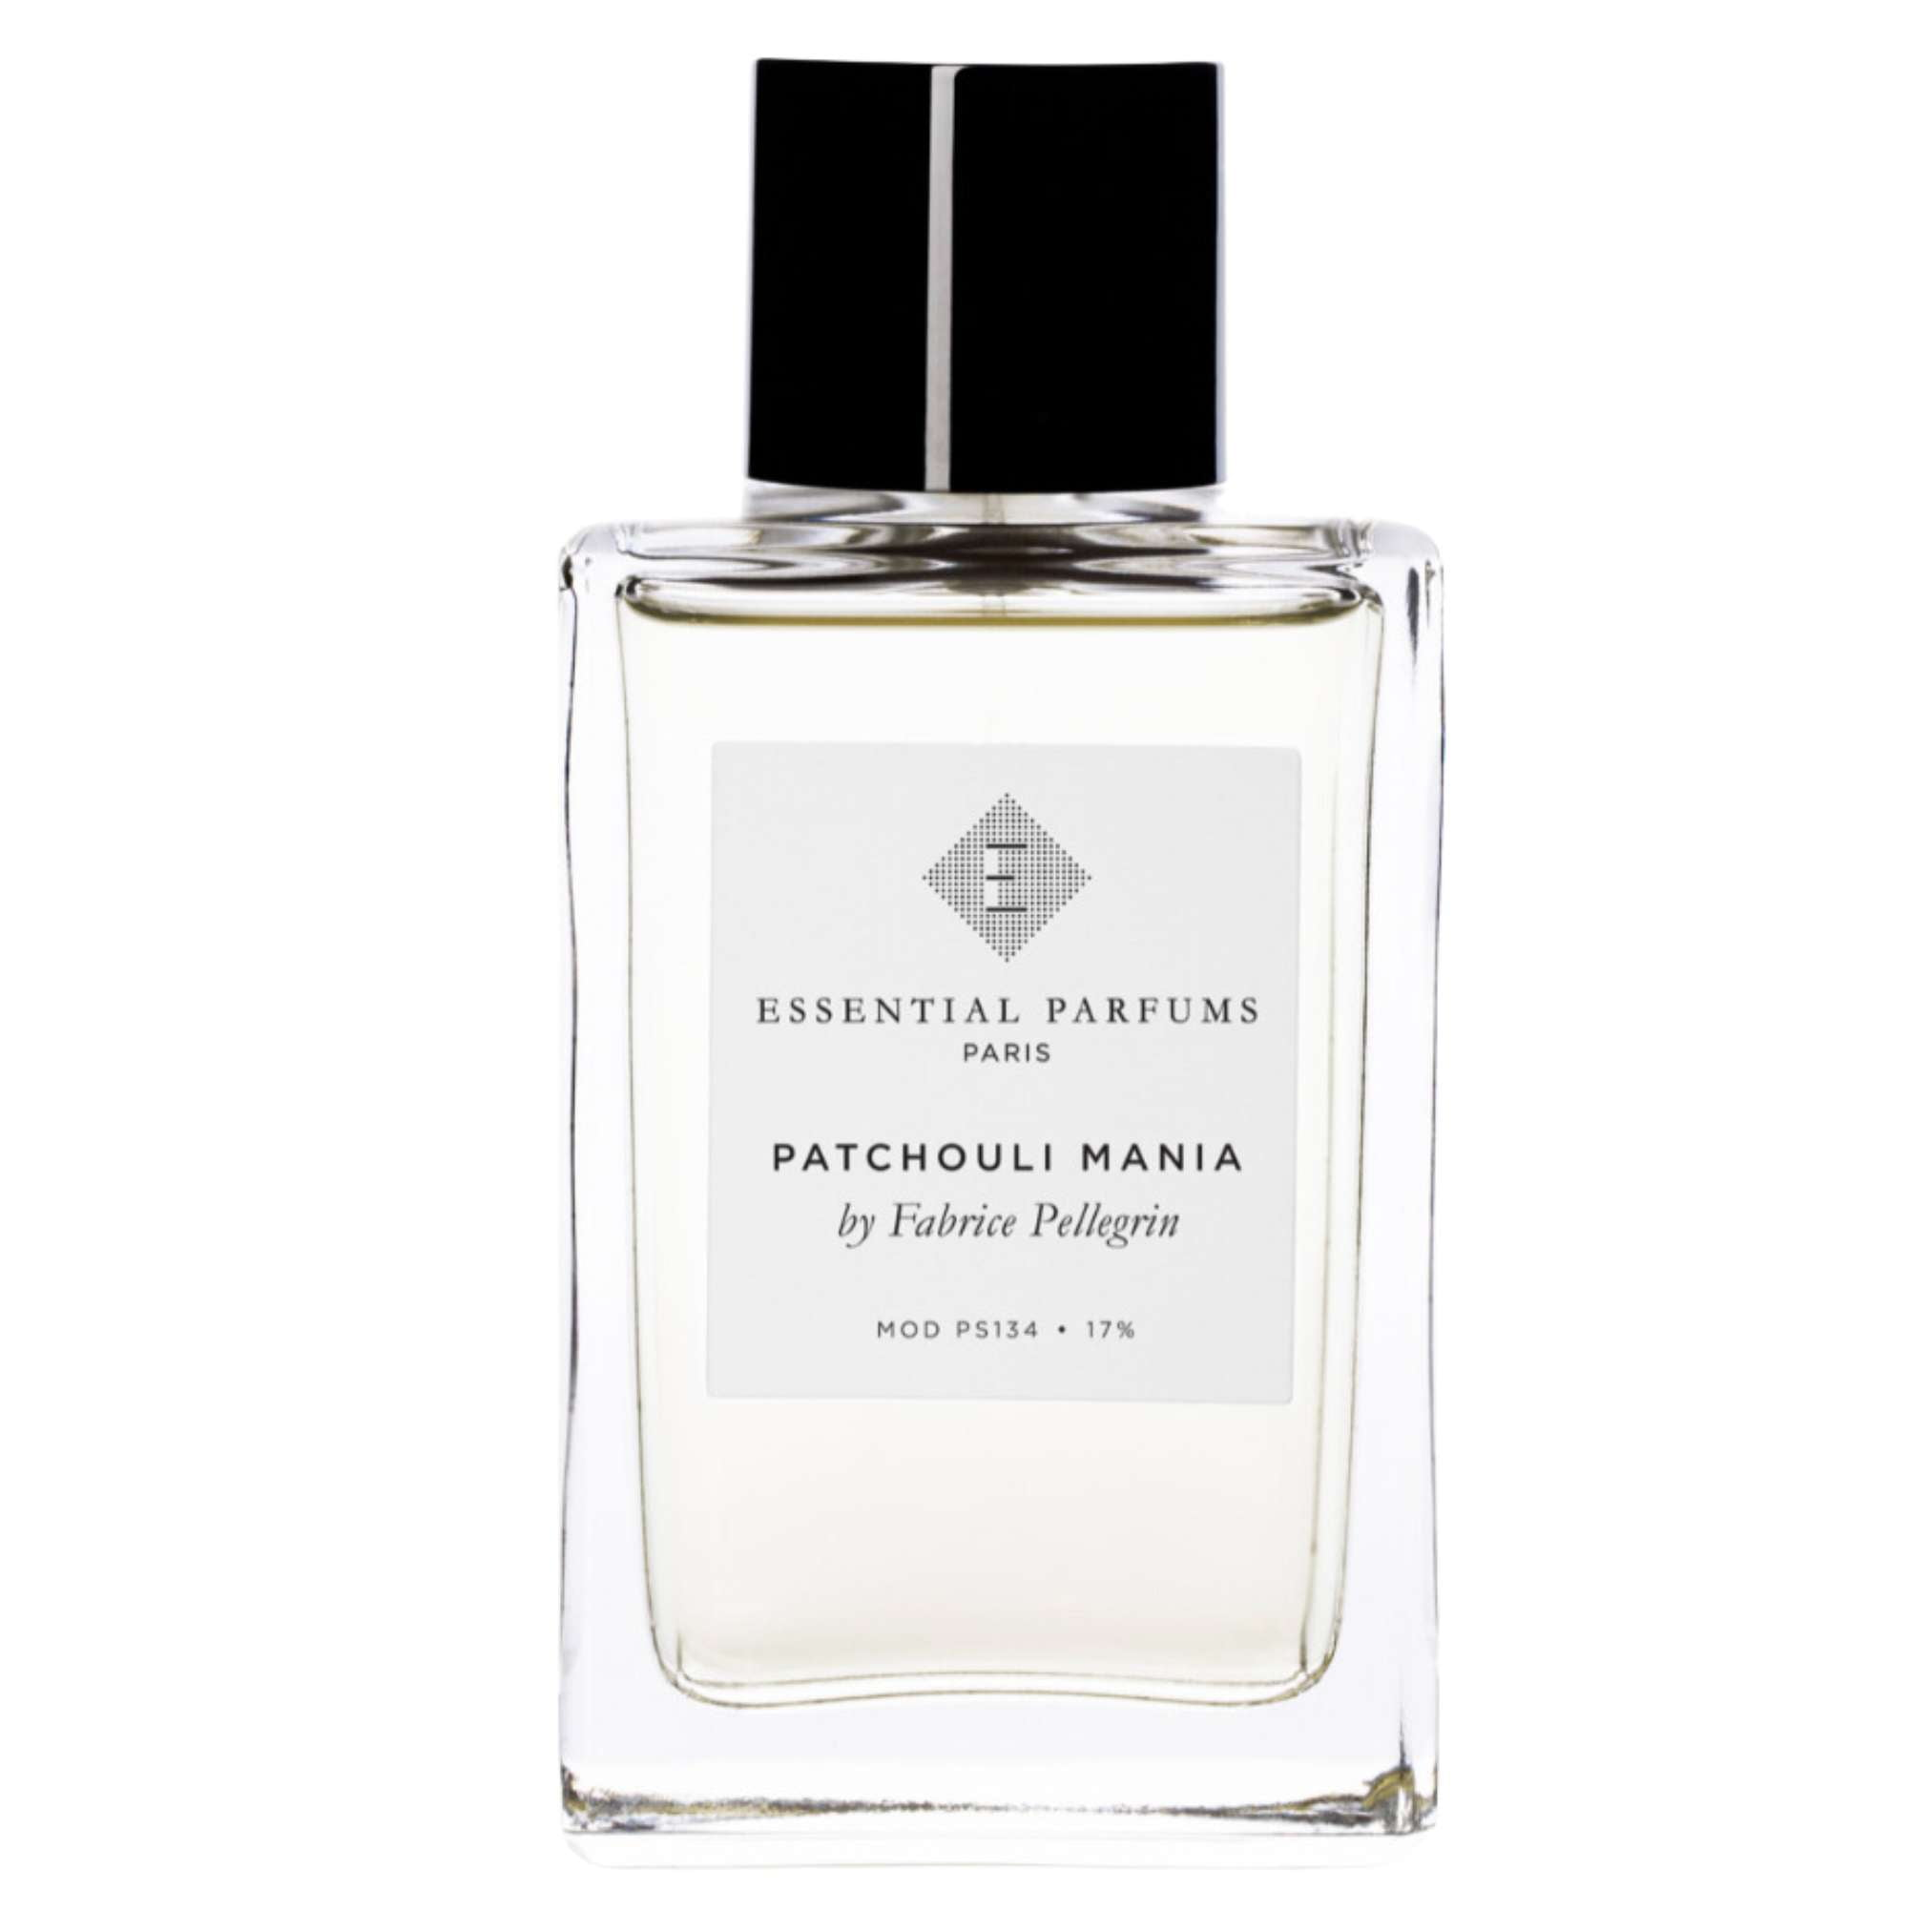 Patchouli Mania - Essential Parfums - INDIEHOUSE modern fragrances